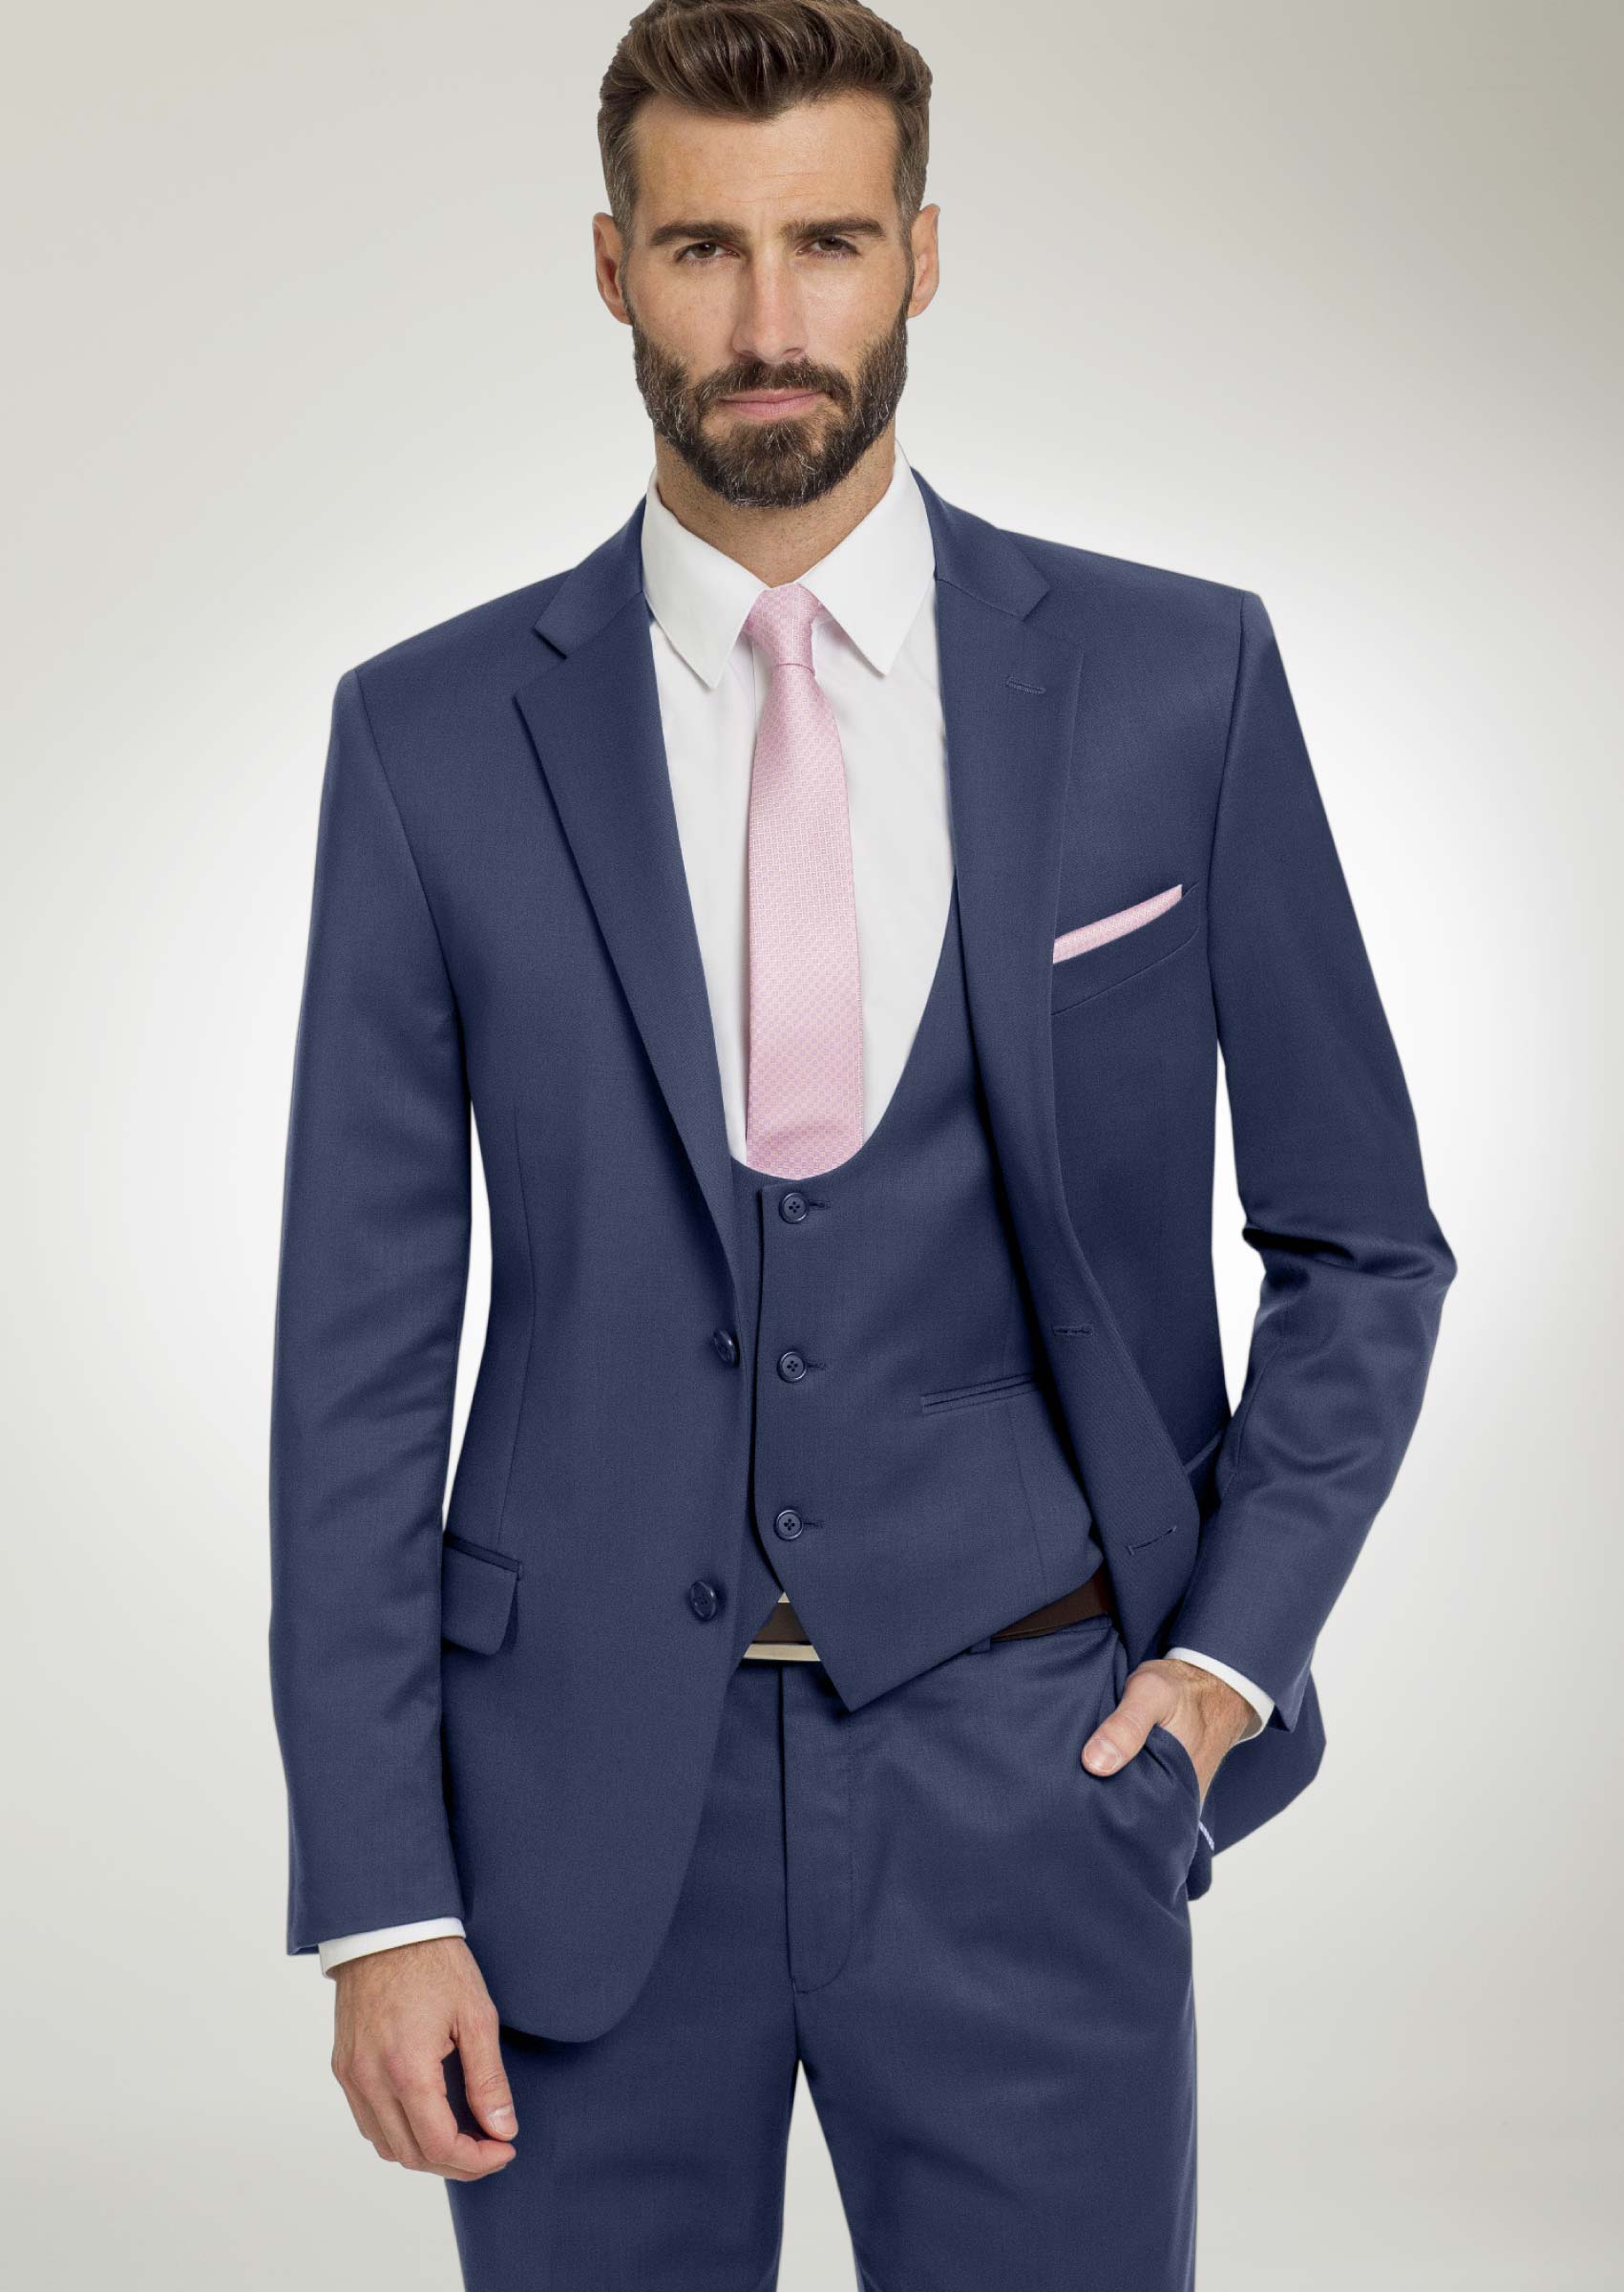 Suit Rentals | Chazmatazz Formalwear | Toms River, NJ